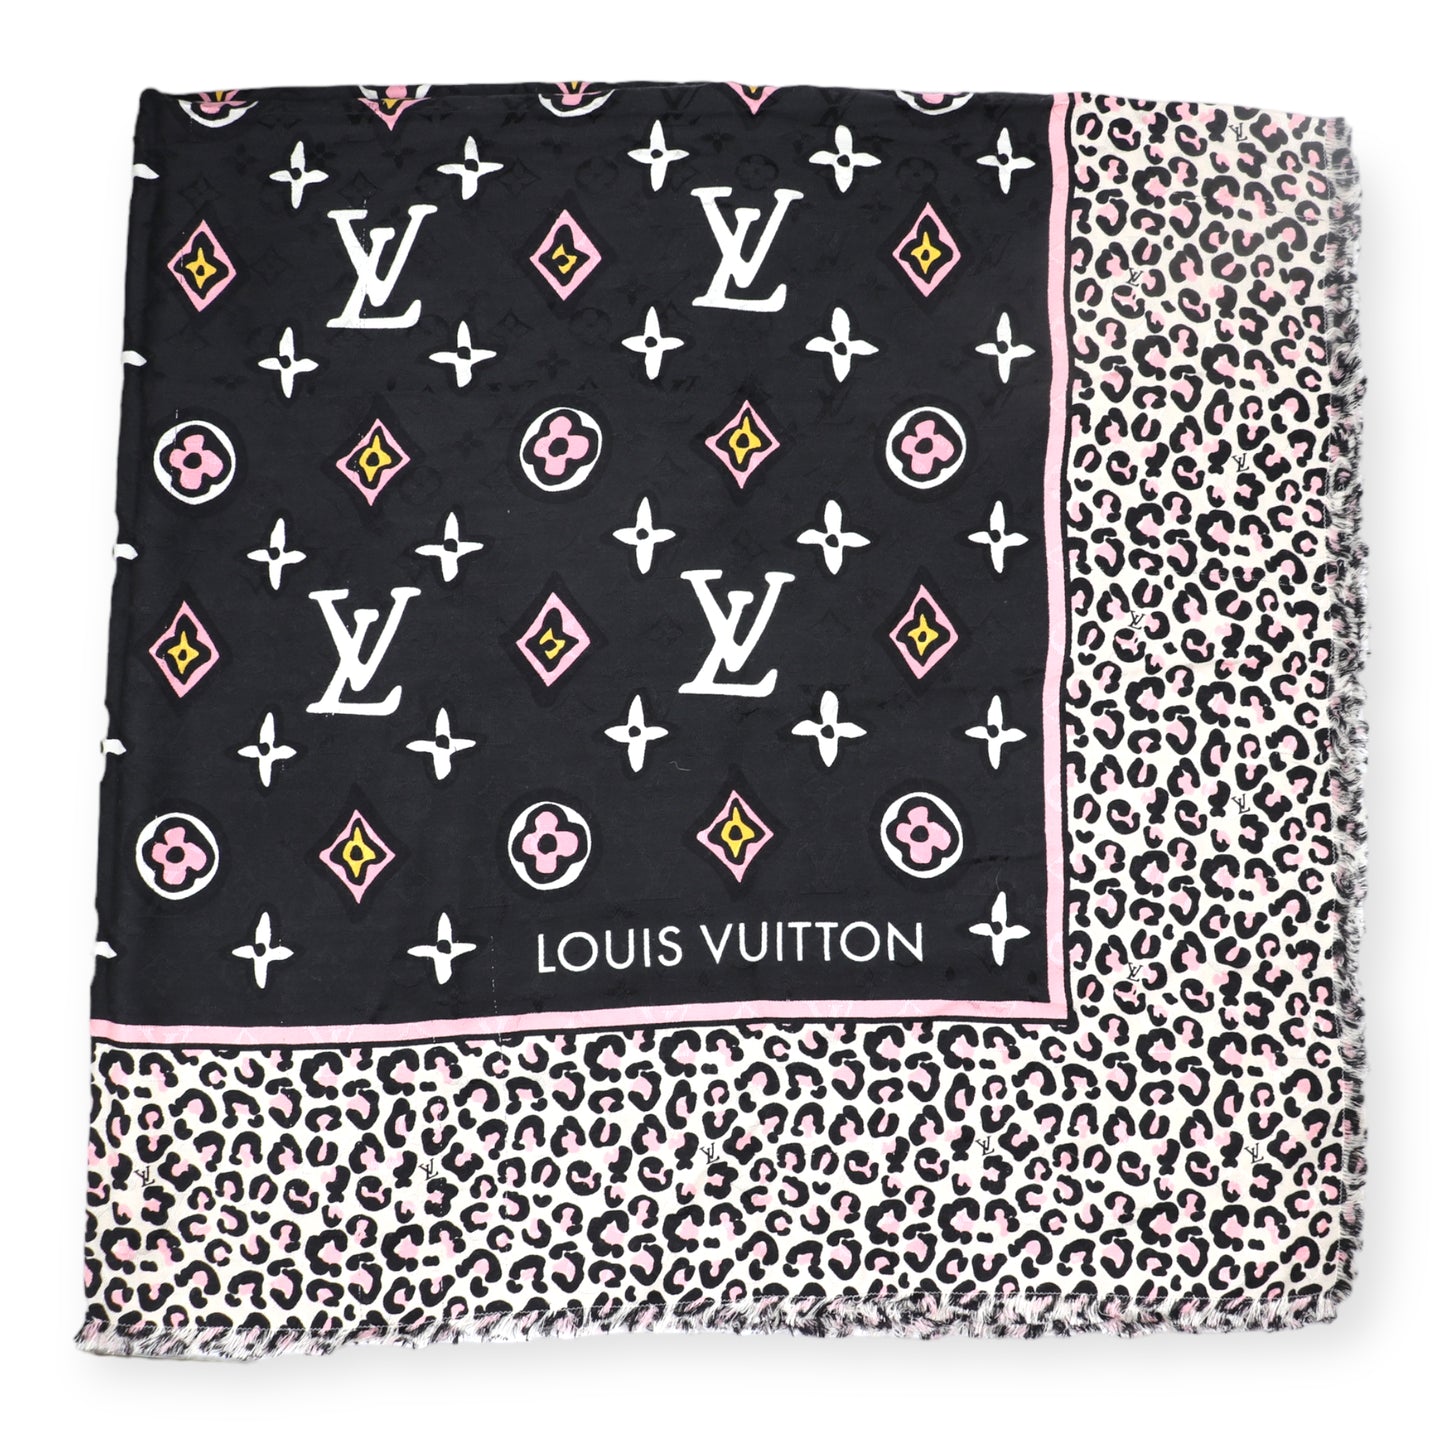 Louis Vuitton “Wild at heart” Schal